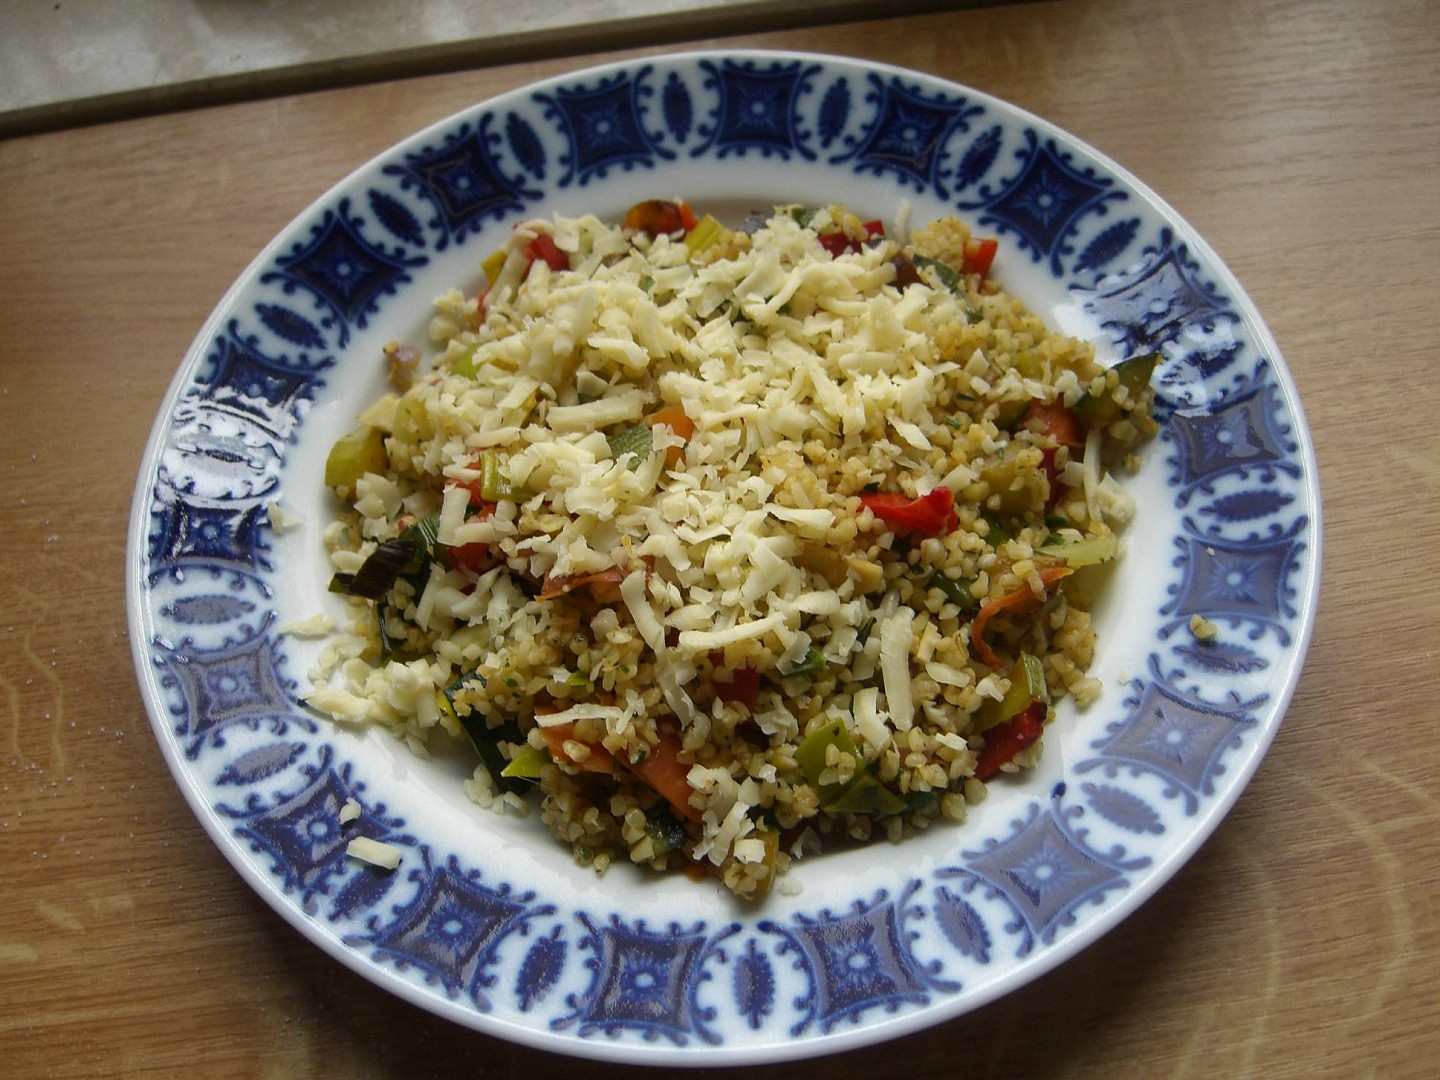 Zeleninové rizoto s bulgurem